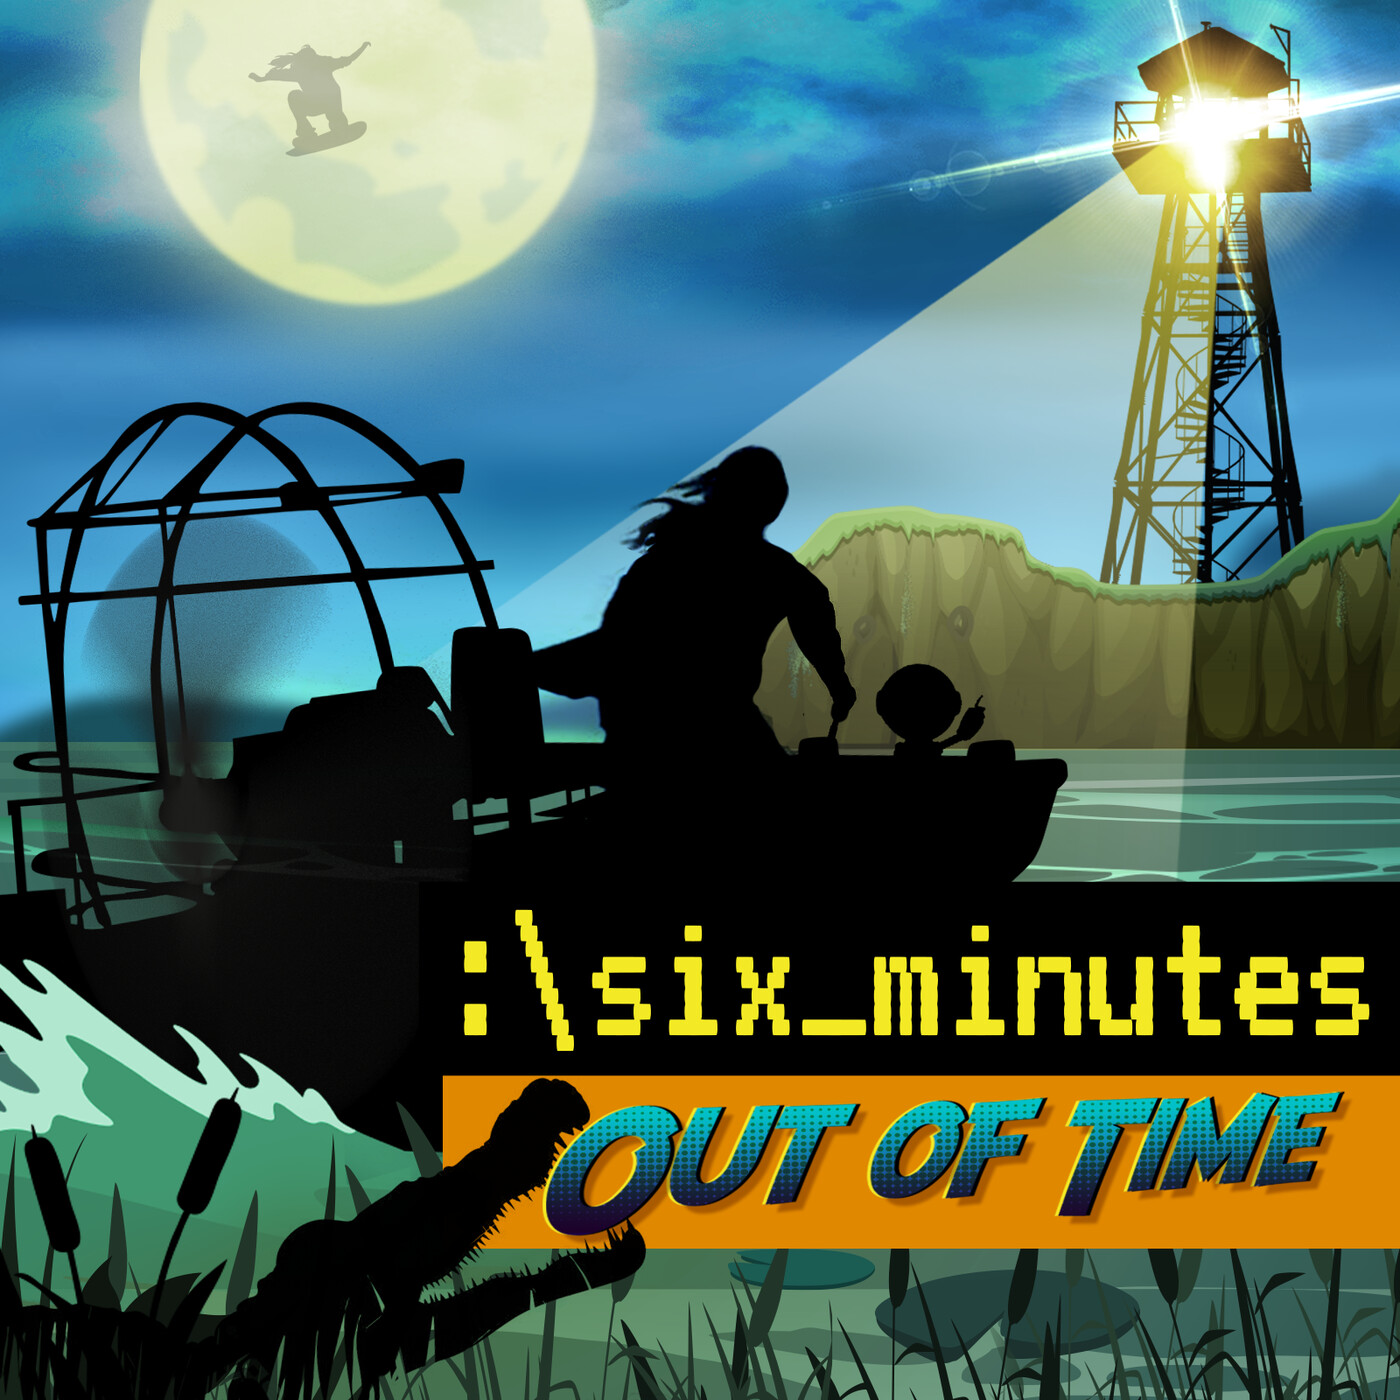 Introducing: Six Minutes Season 3